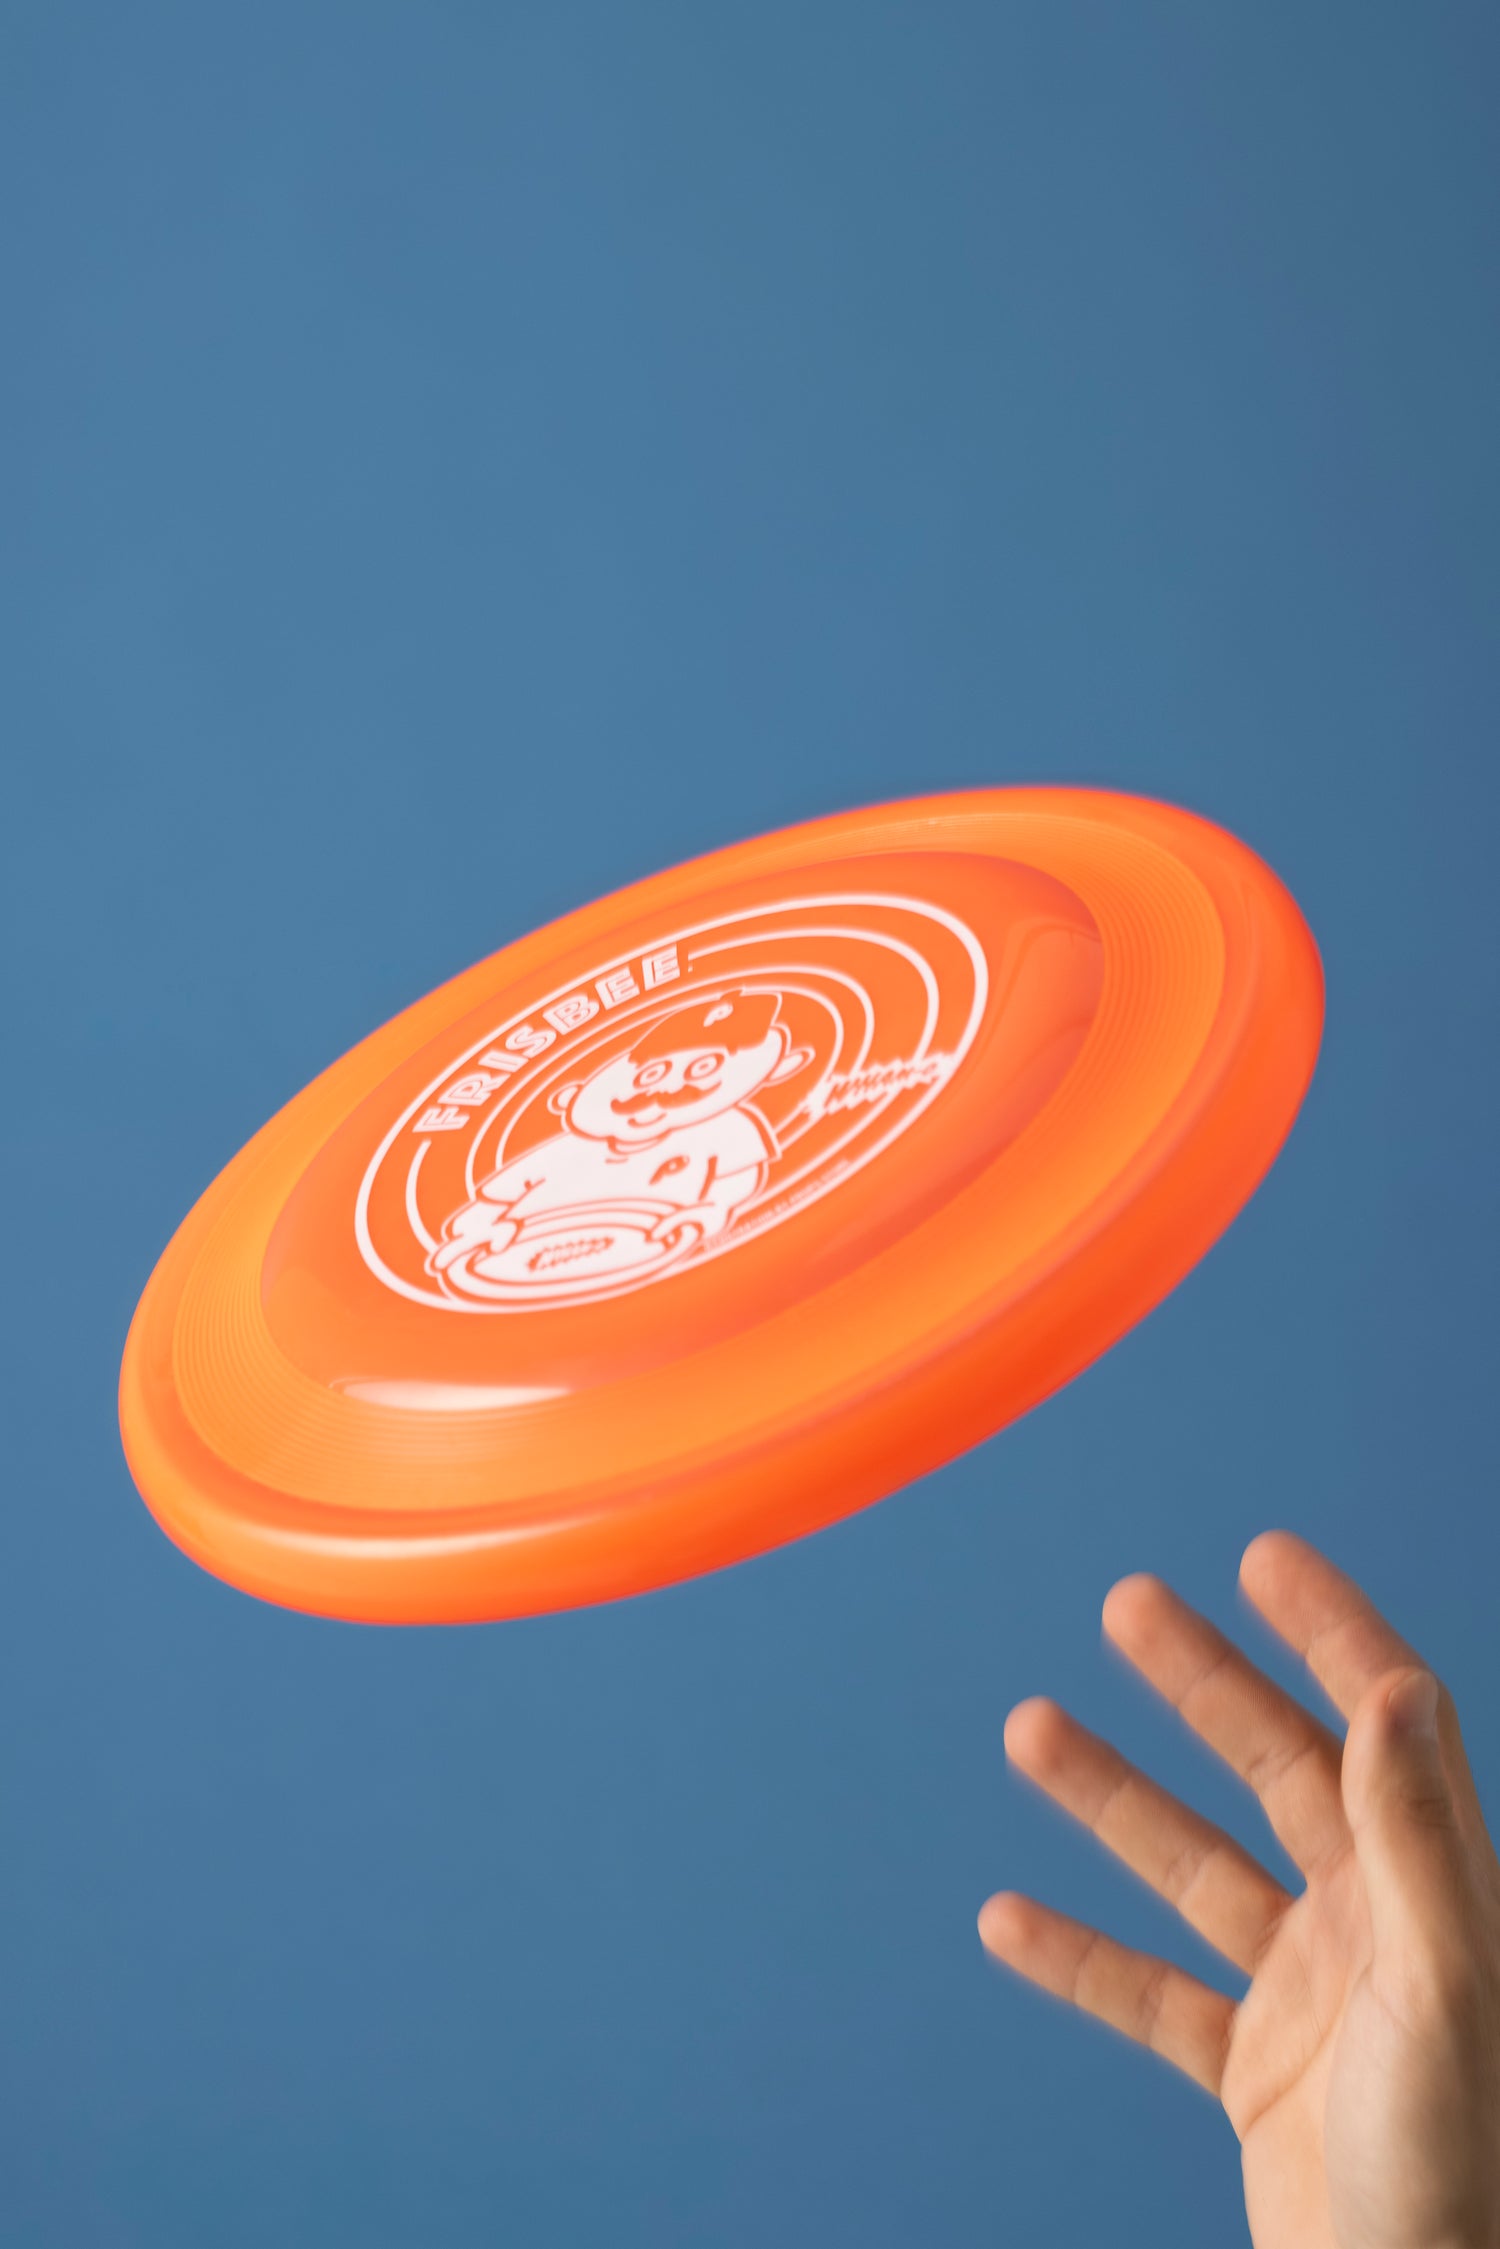 Park Sacoshe with Frisbee